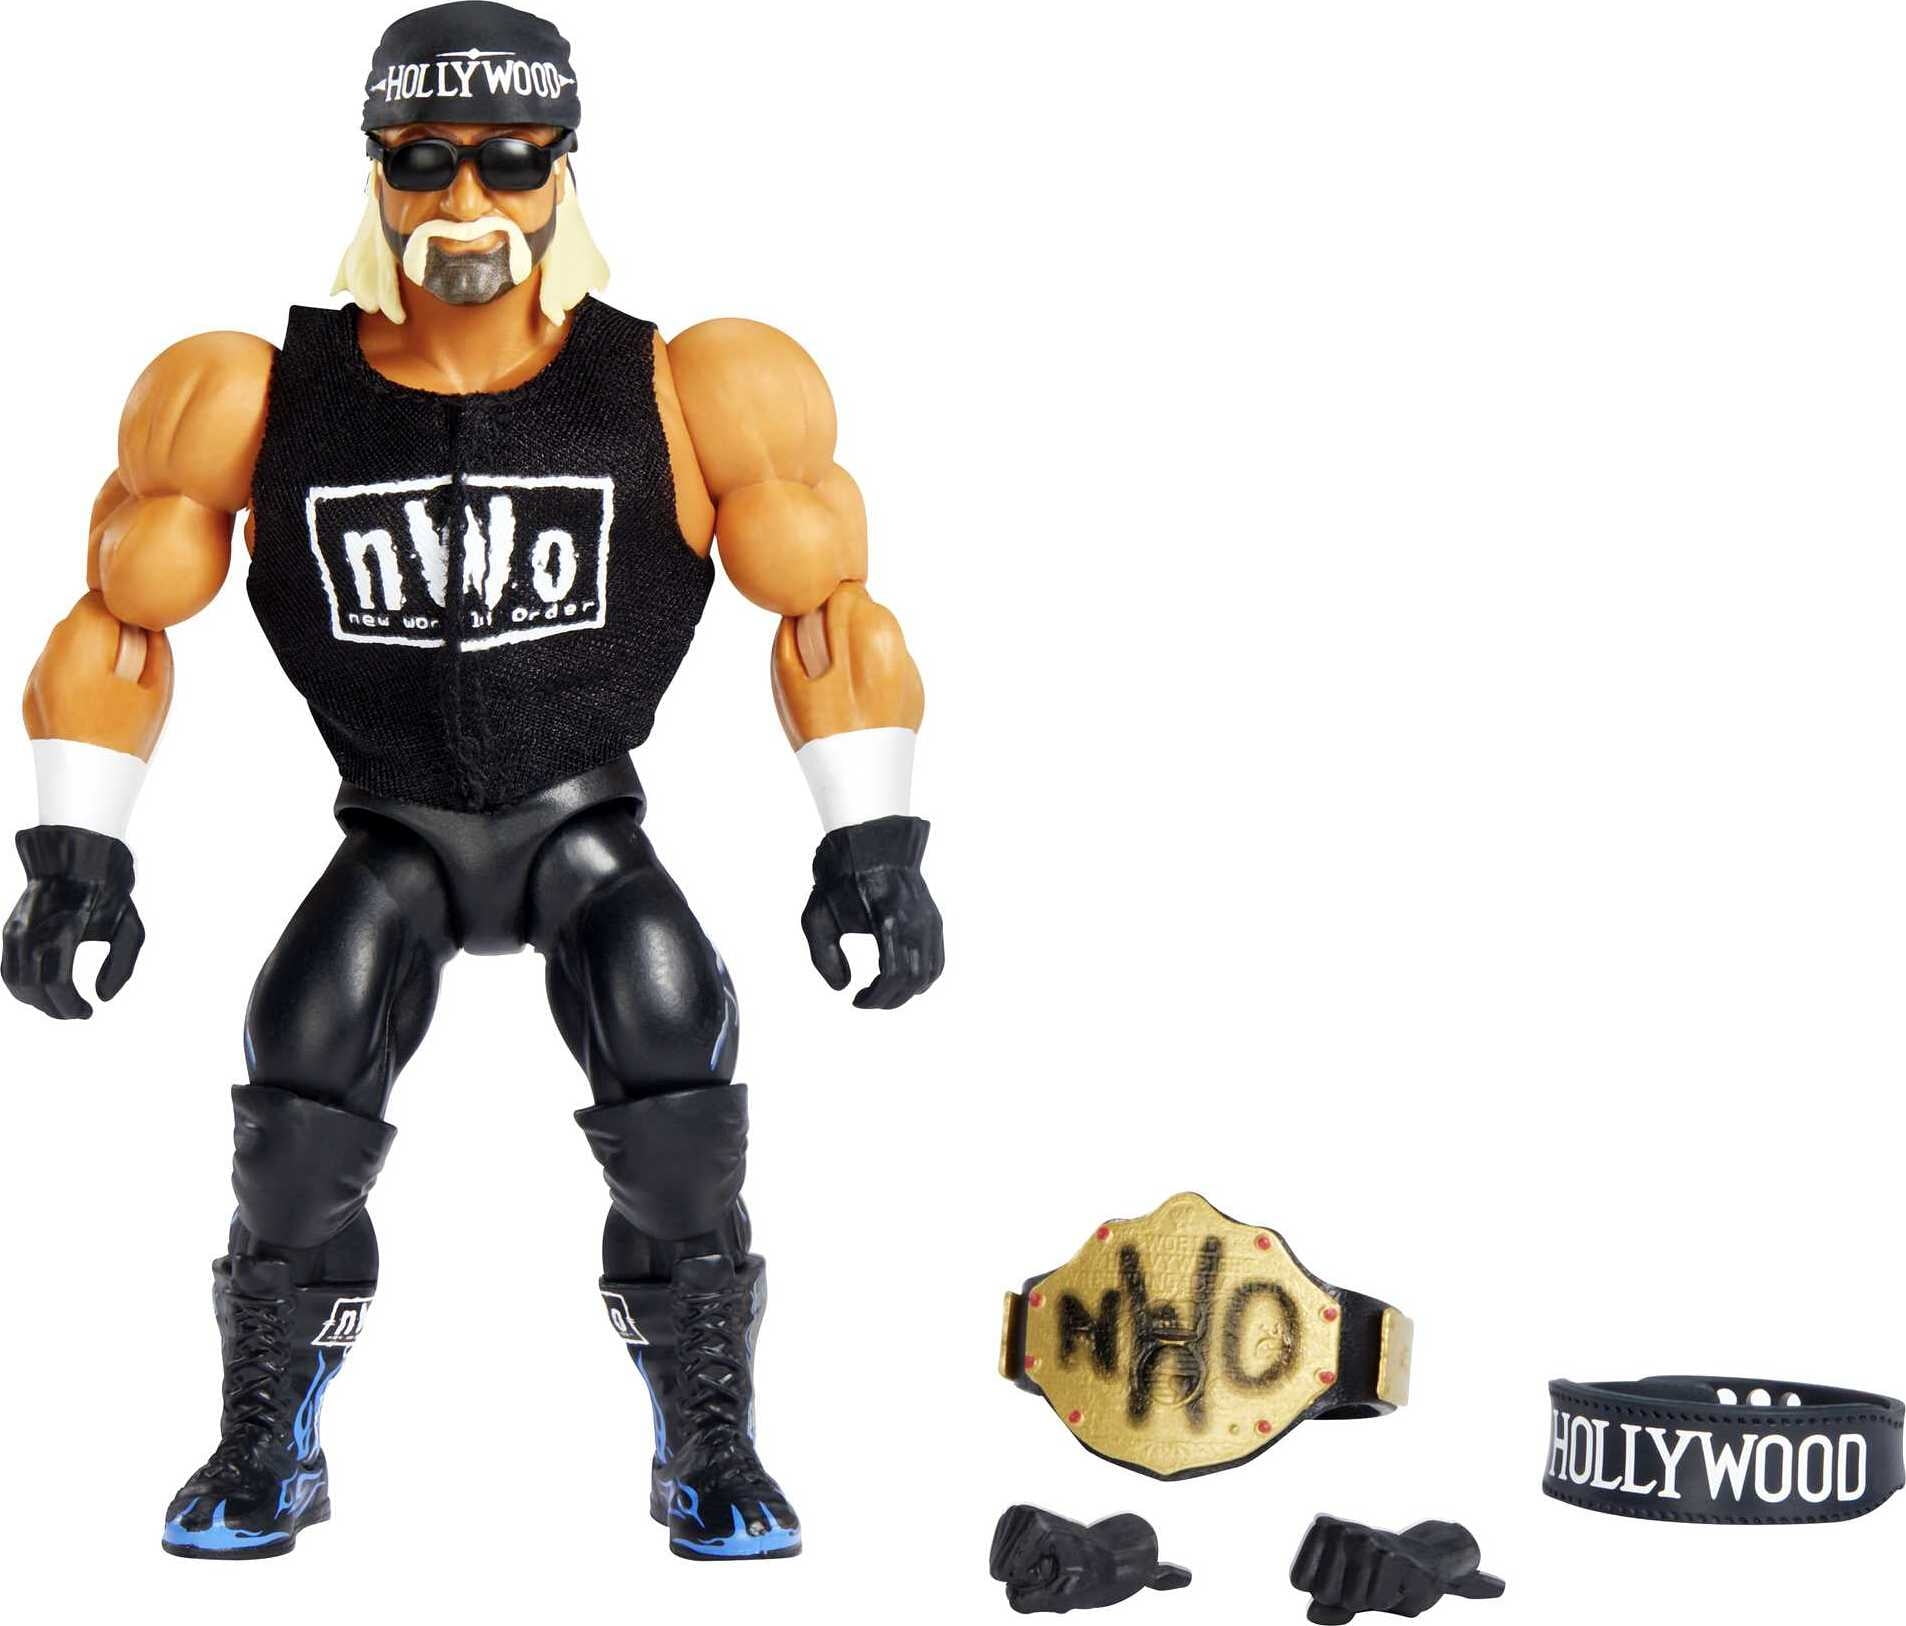 WWE Superstars “Hollywood” Hulk Hogan Action Figure (Walmart Exclusive)